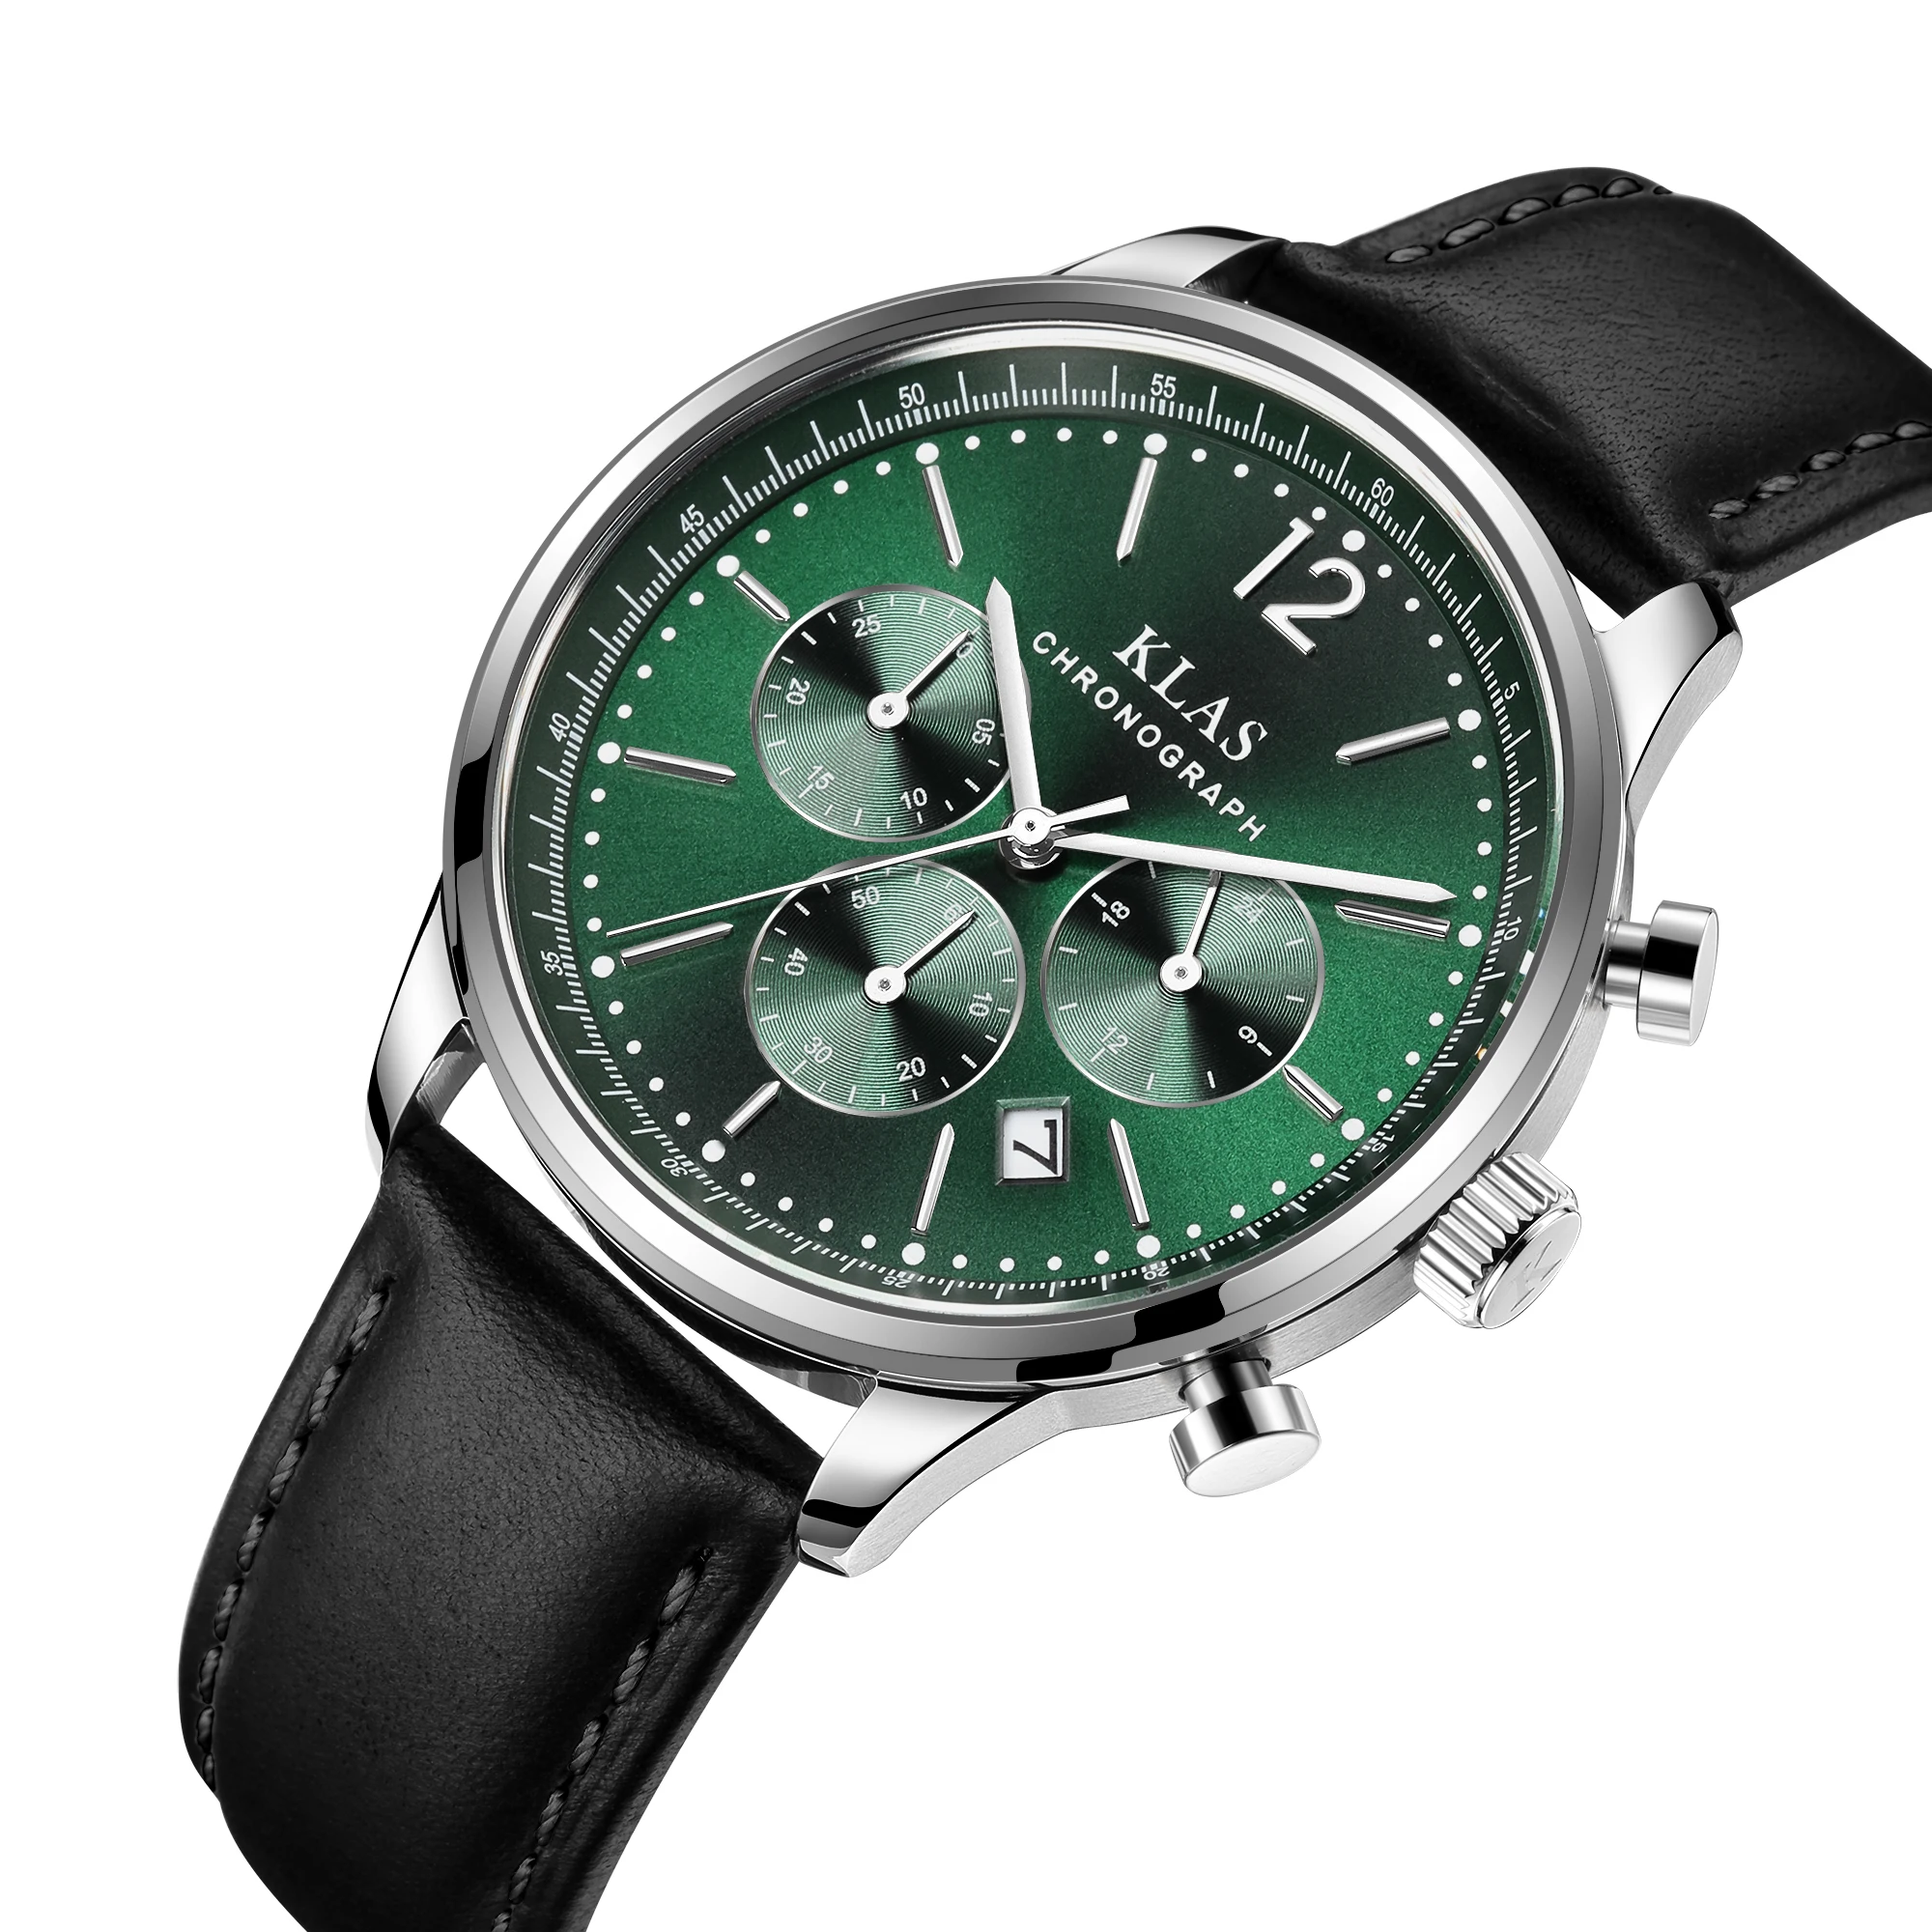 Men's watch casual waterproof trend KLAS Brand relojes часы женские  High-end gift